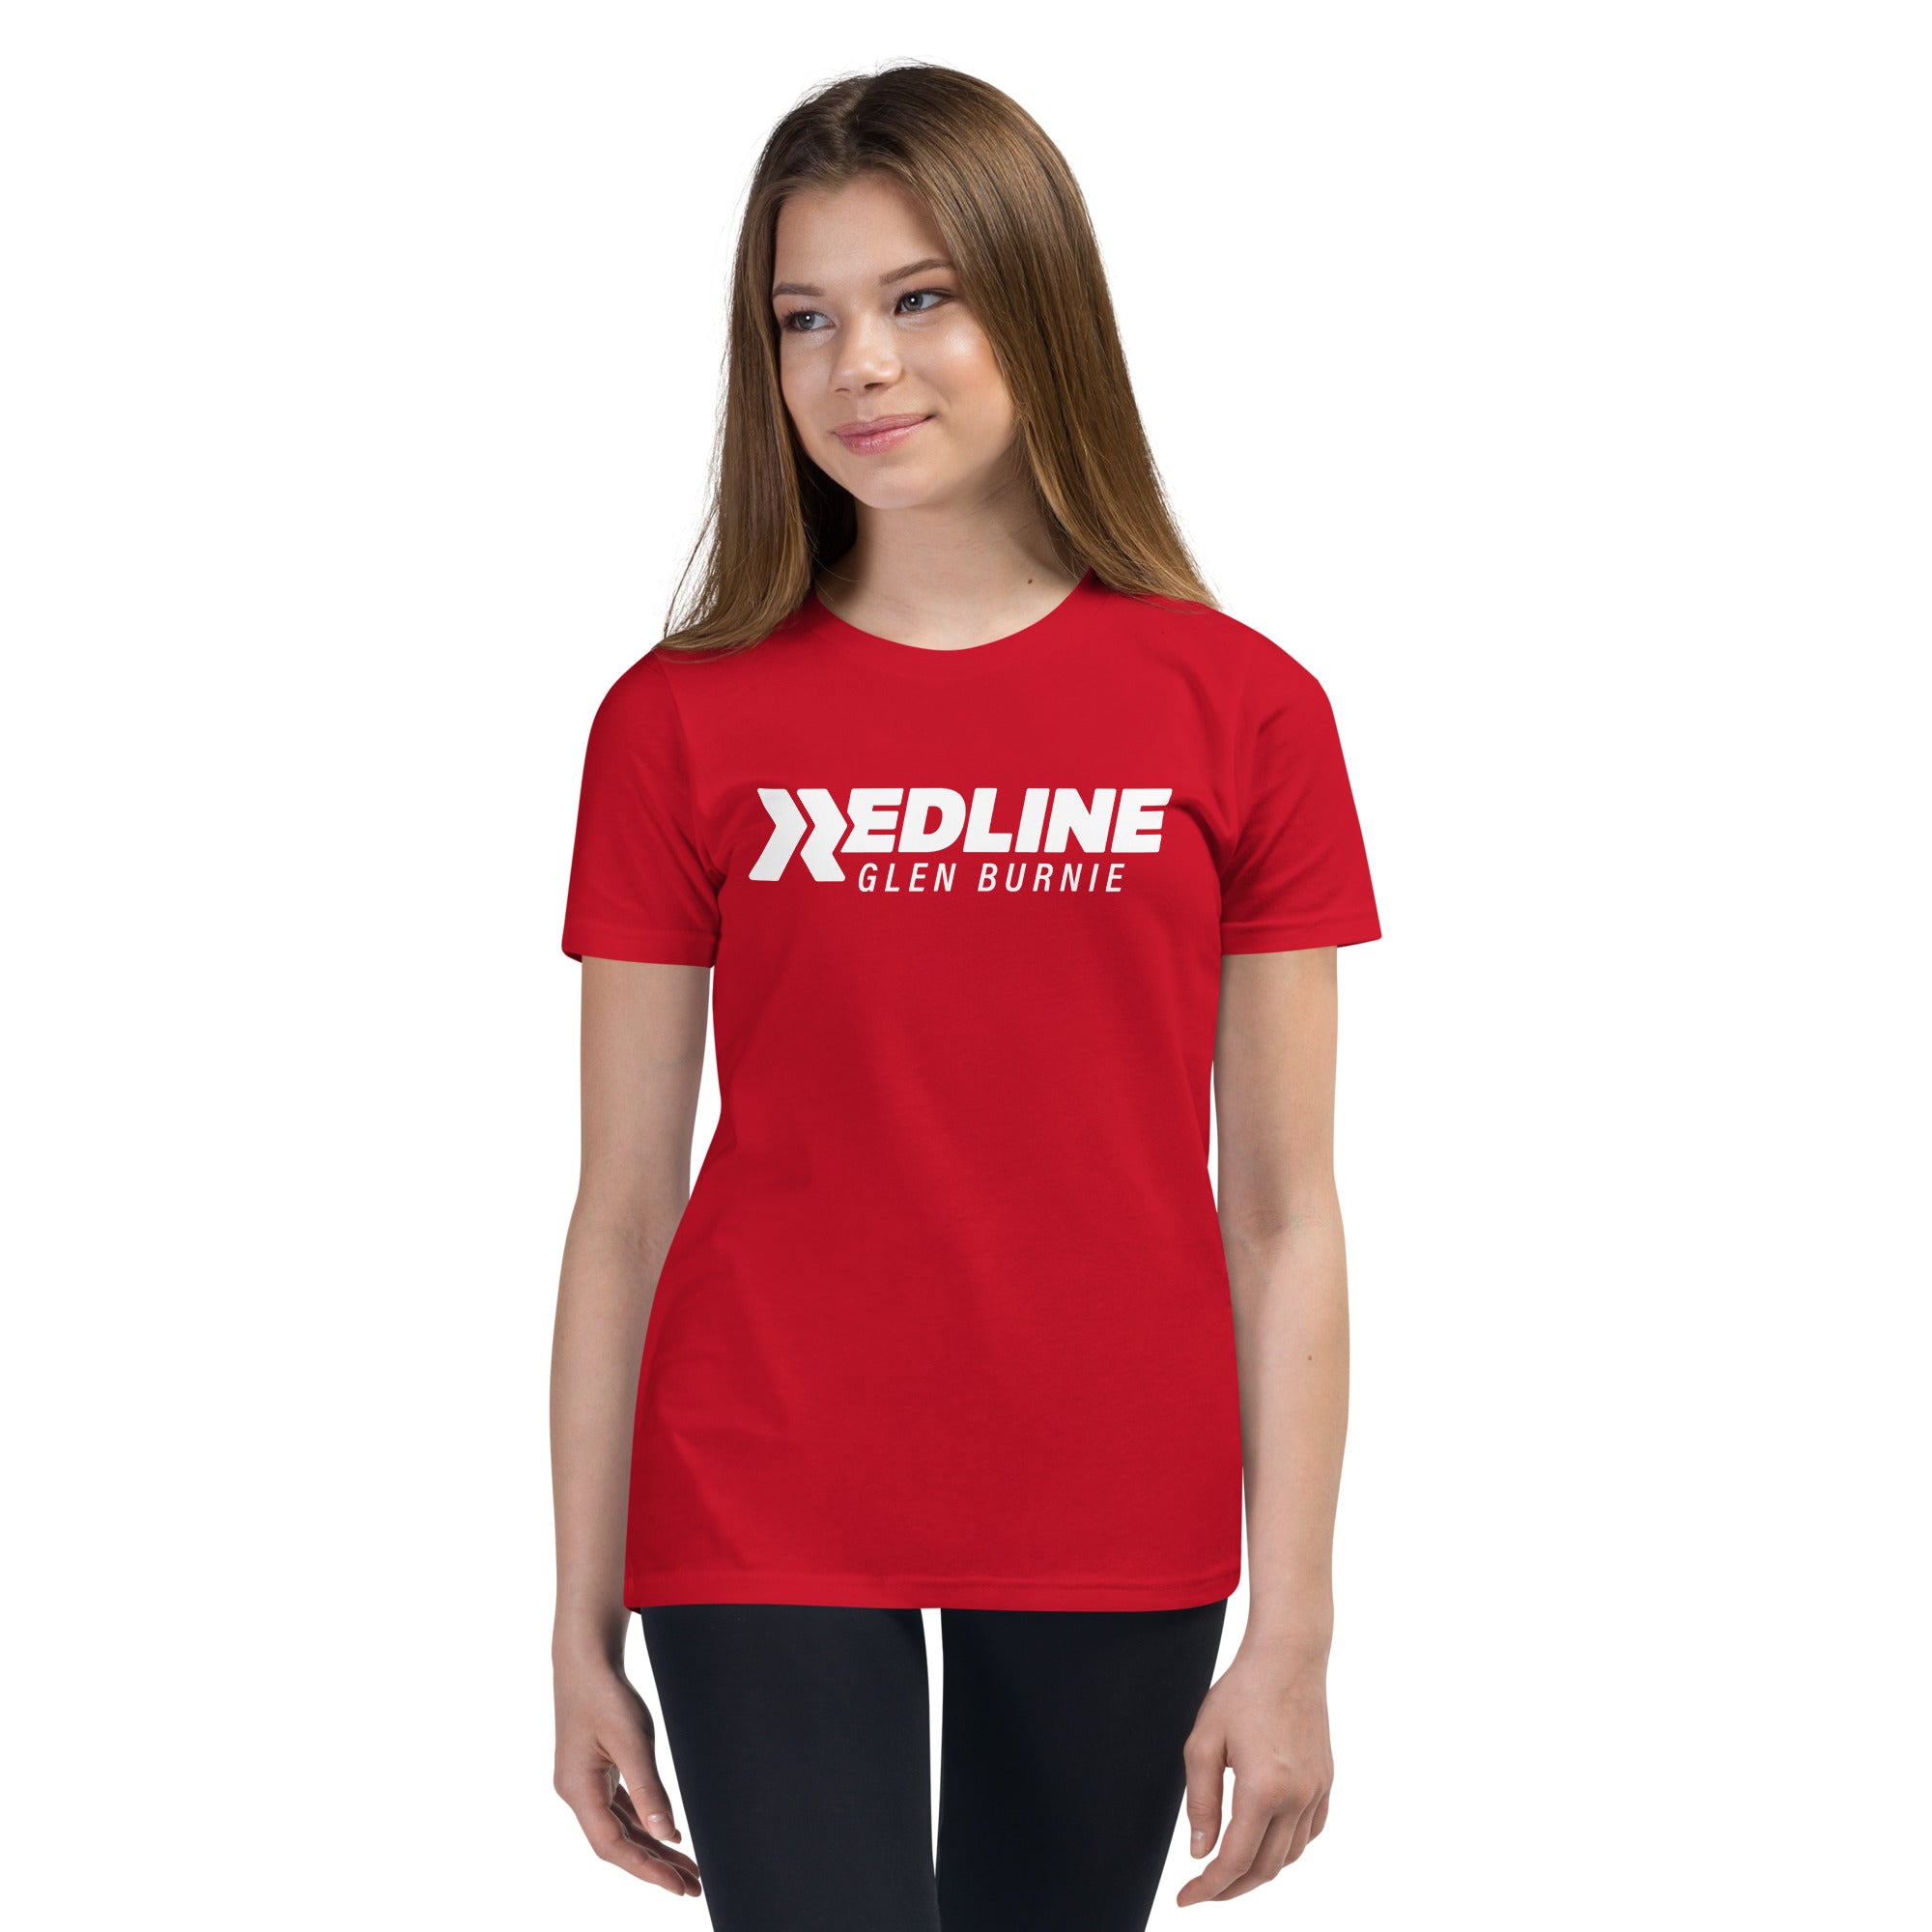 Glen Burnie Logo W - Red Youth Short Sleeve T-Shirt